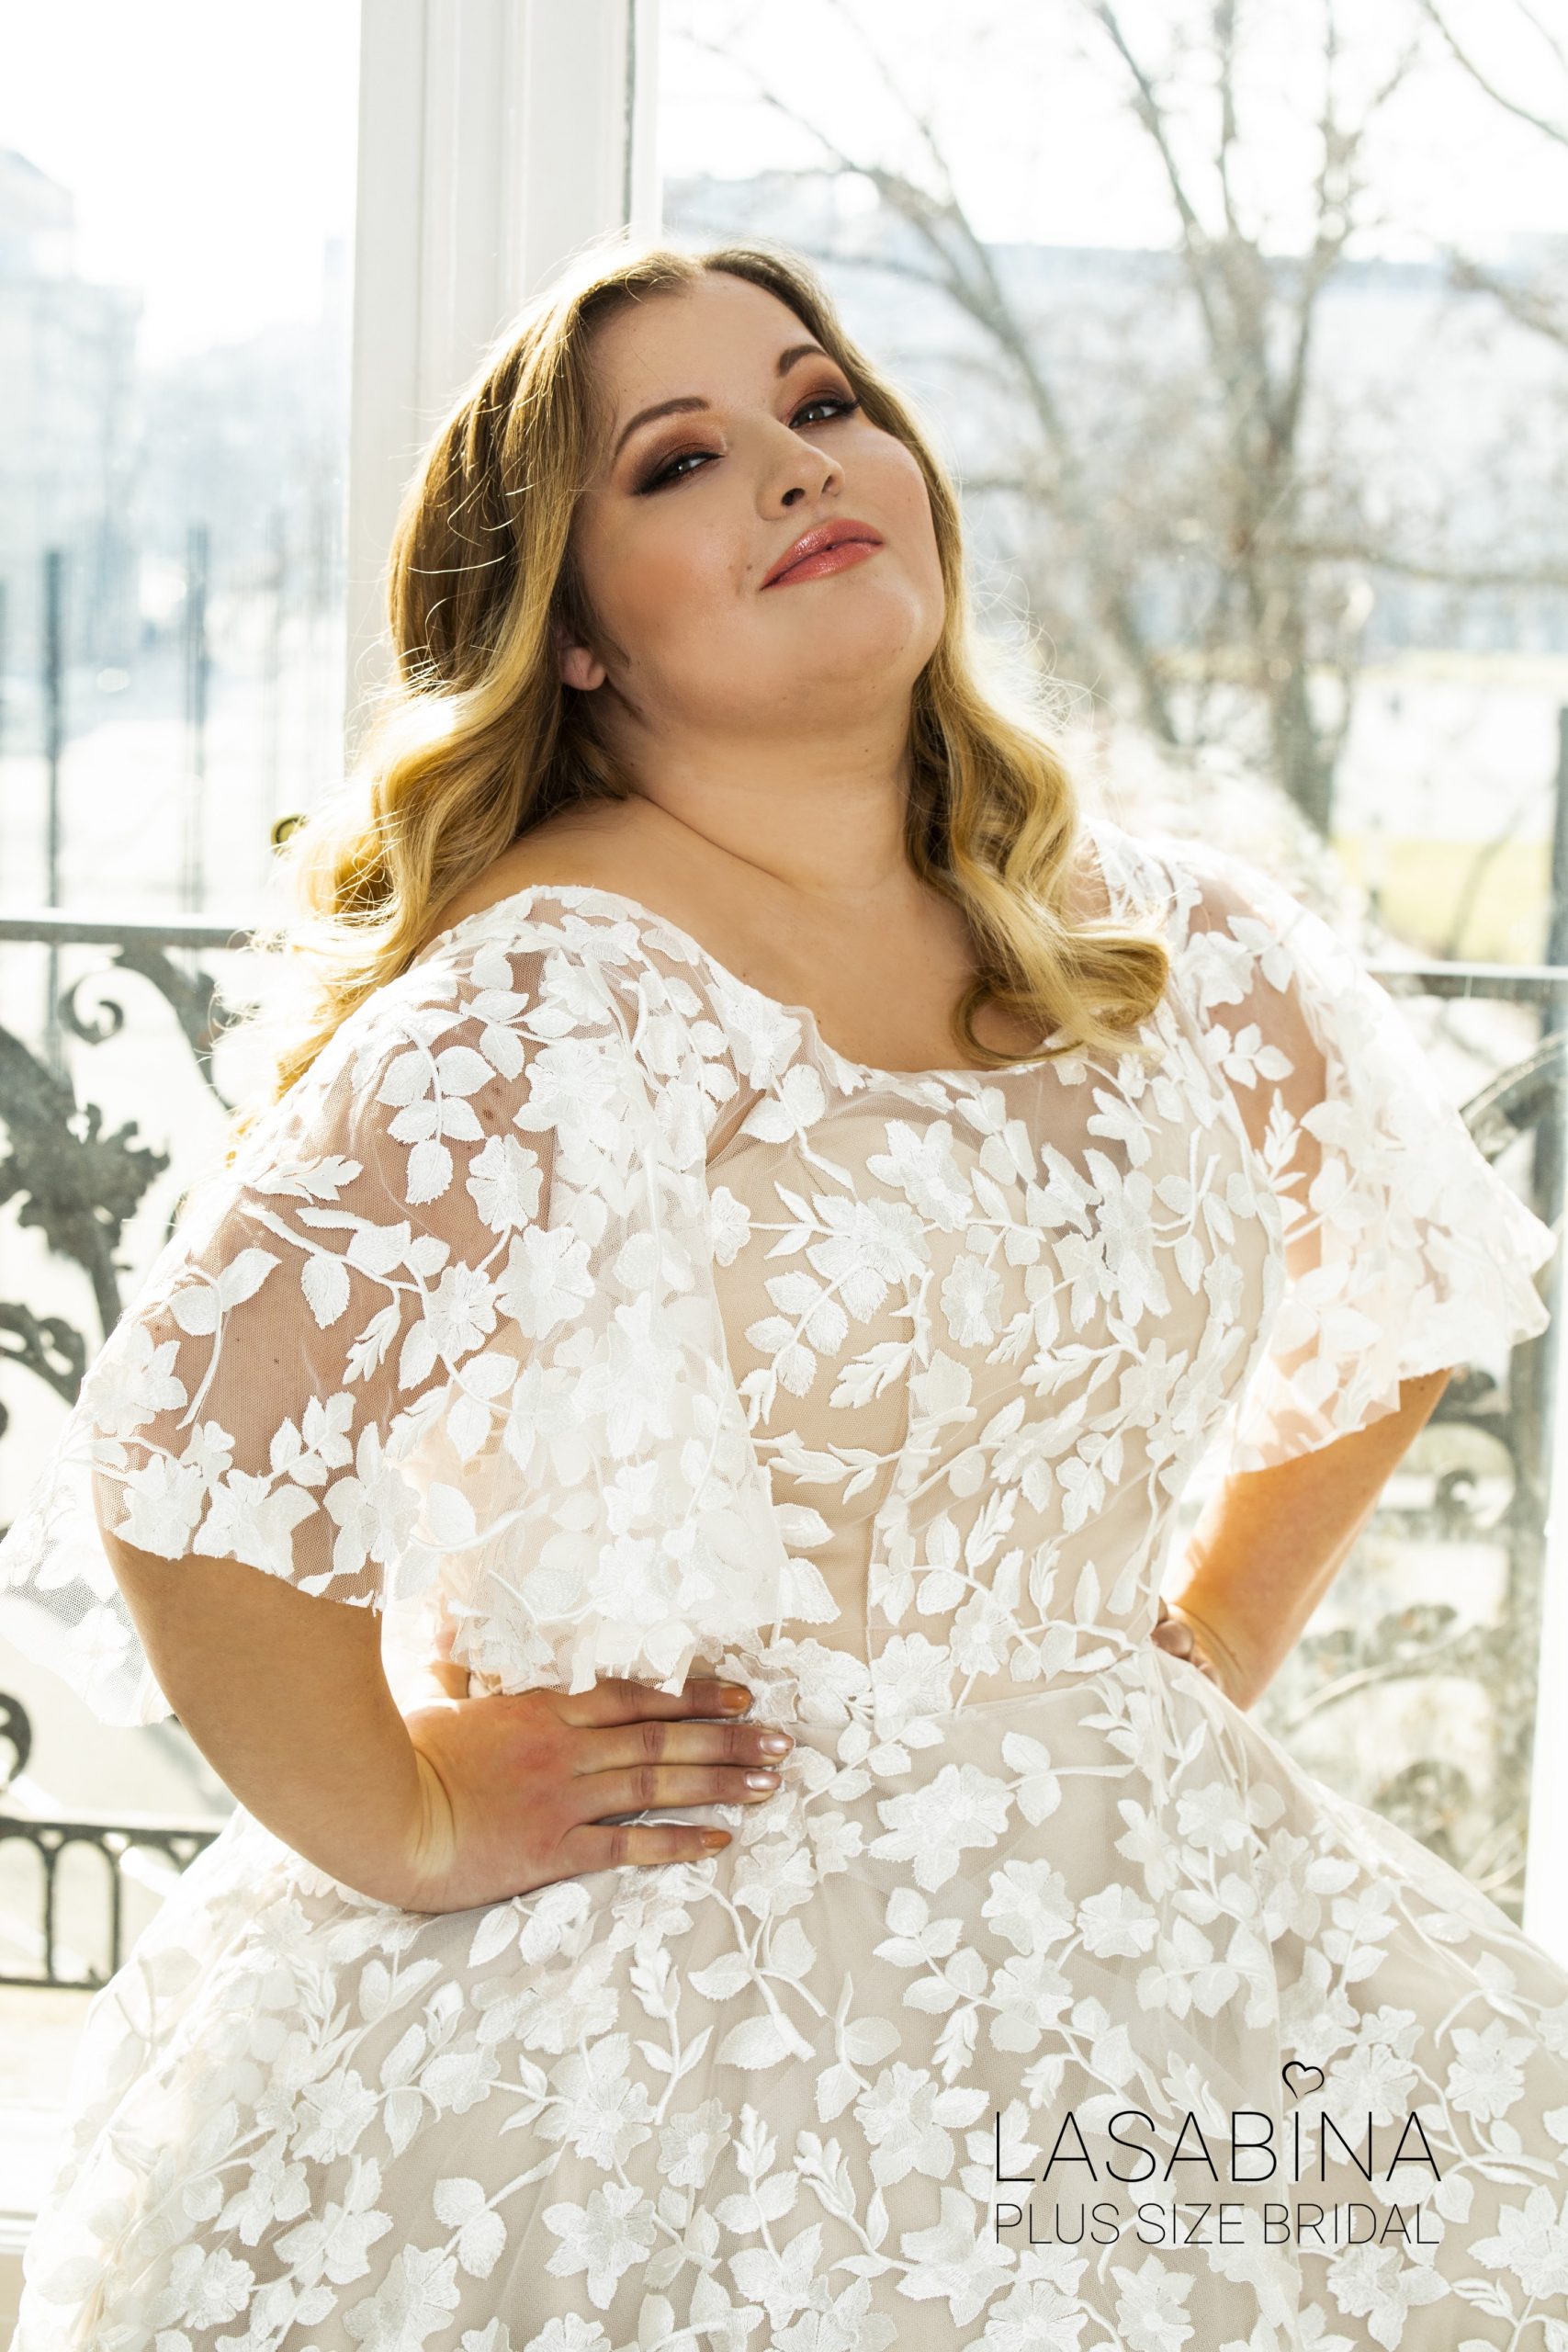 ESTELLA plus size wedding dress - LASABINA Plus Size Bridal